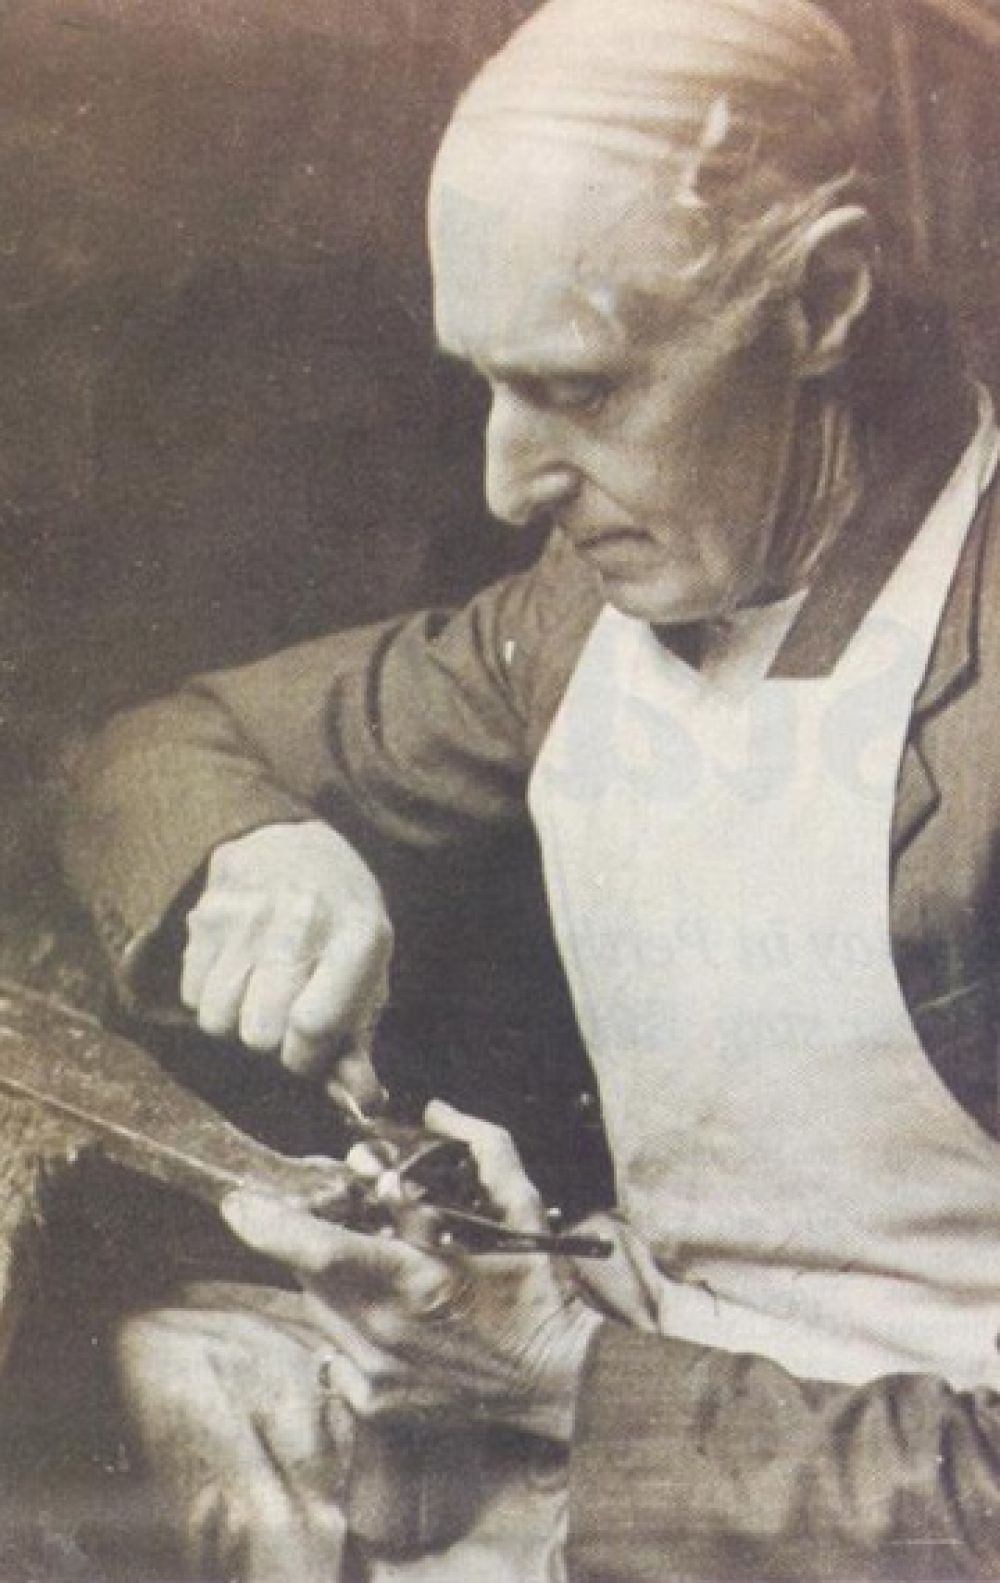 Harry Kell - Dickson's Master Gun Engraver